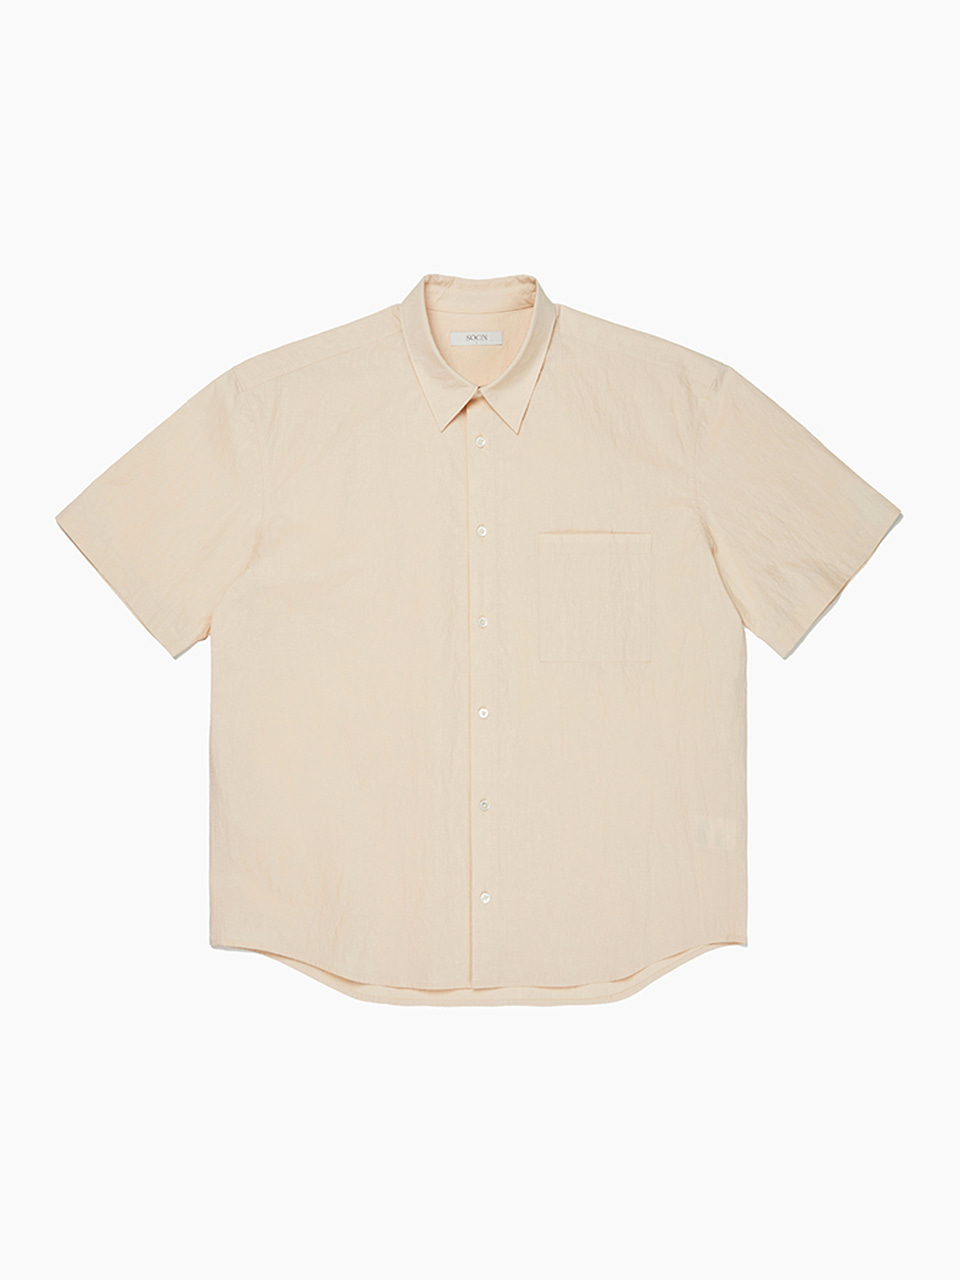 Crease Cotton Half Shirts (Vanilla)